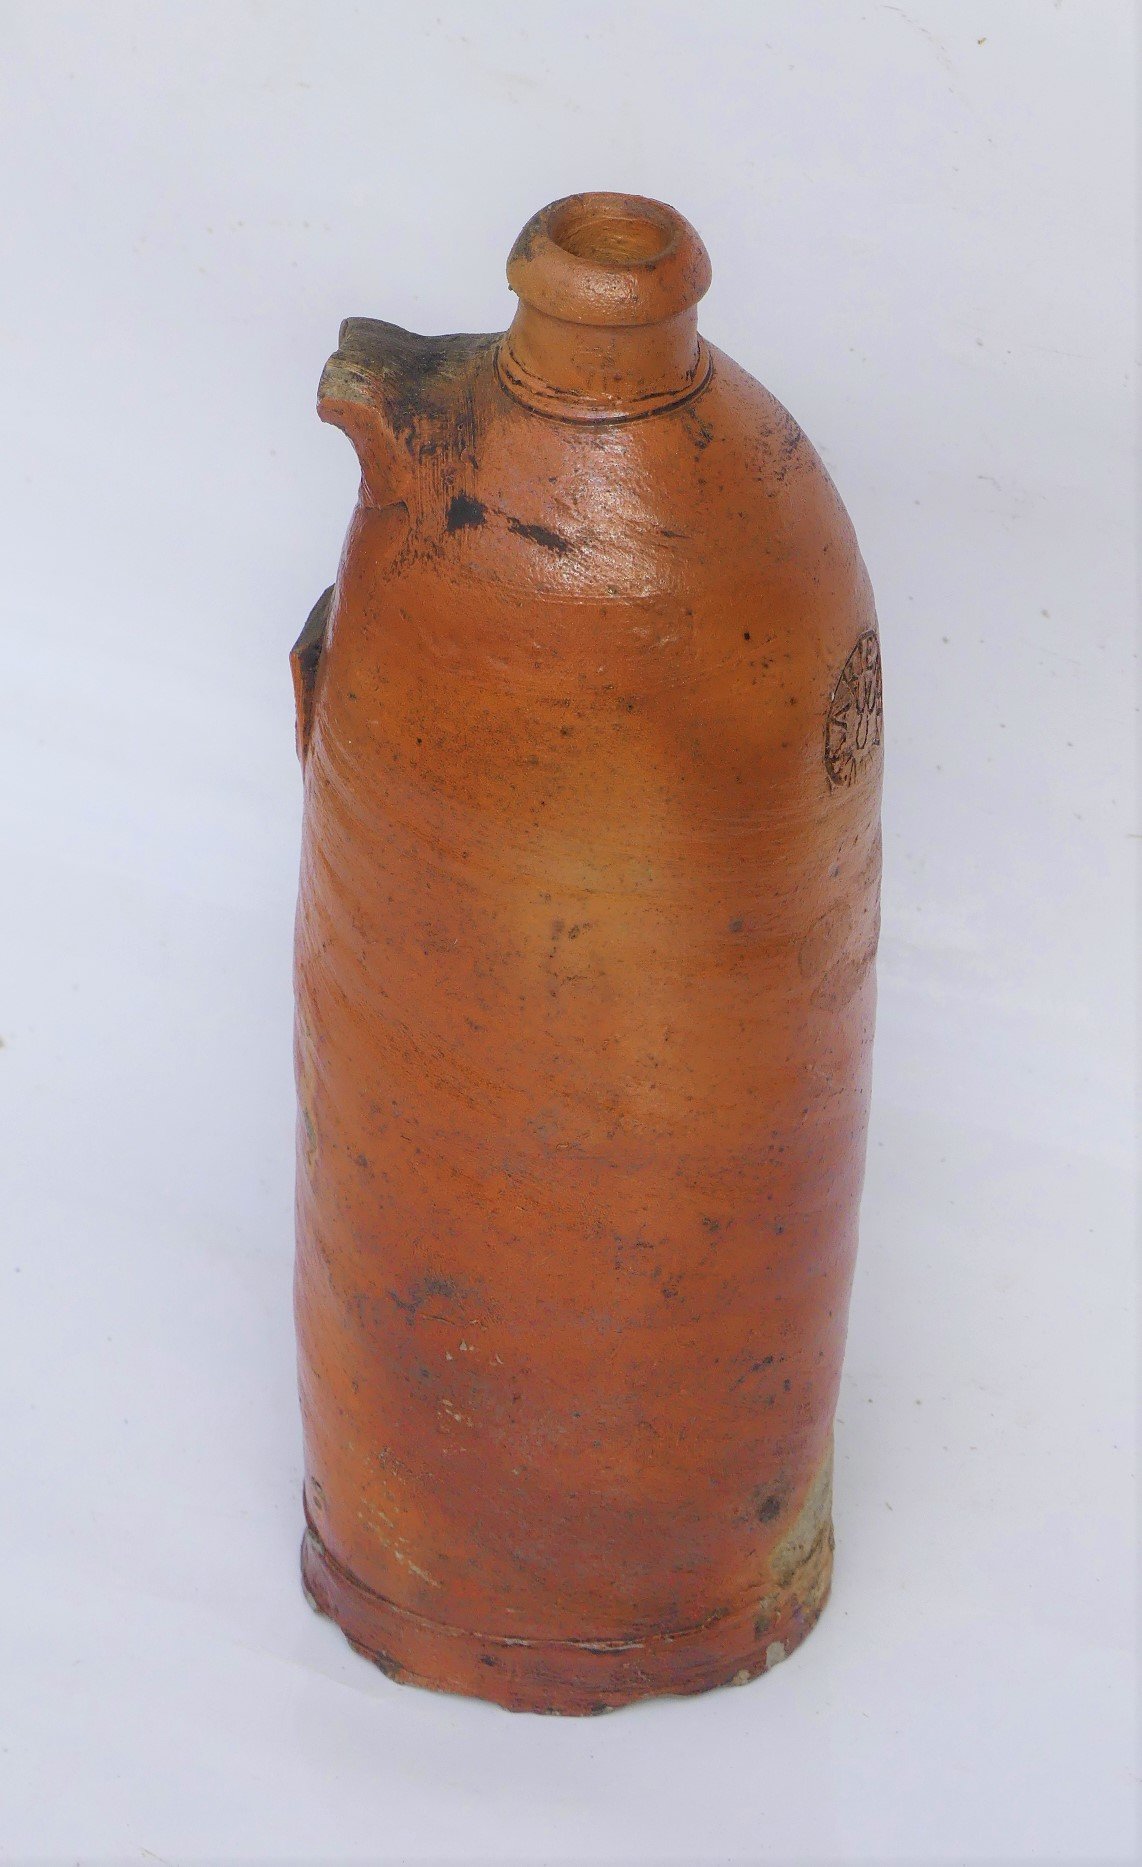 Gyógyvizes palack Marienbadból (Tapolcai Városi Múzeum CC BY-NC-SA)